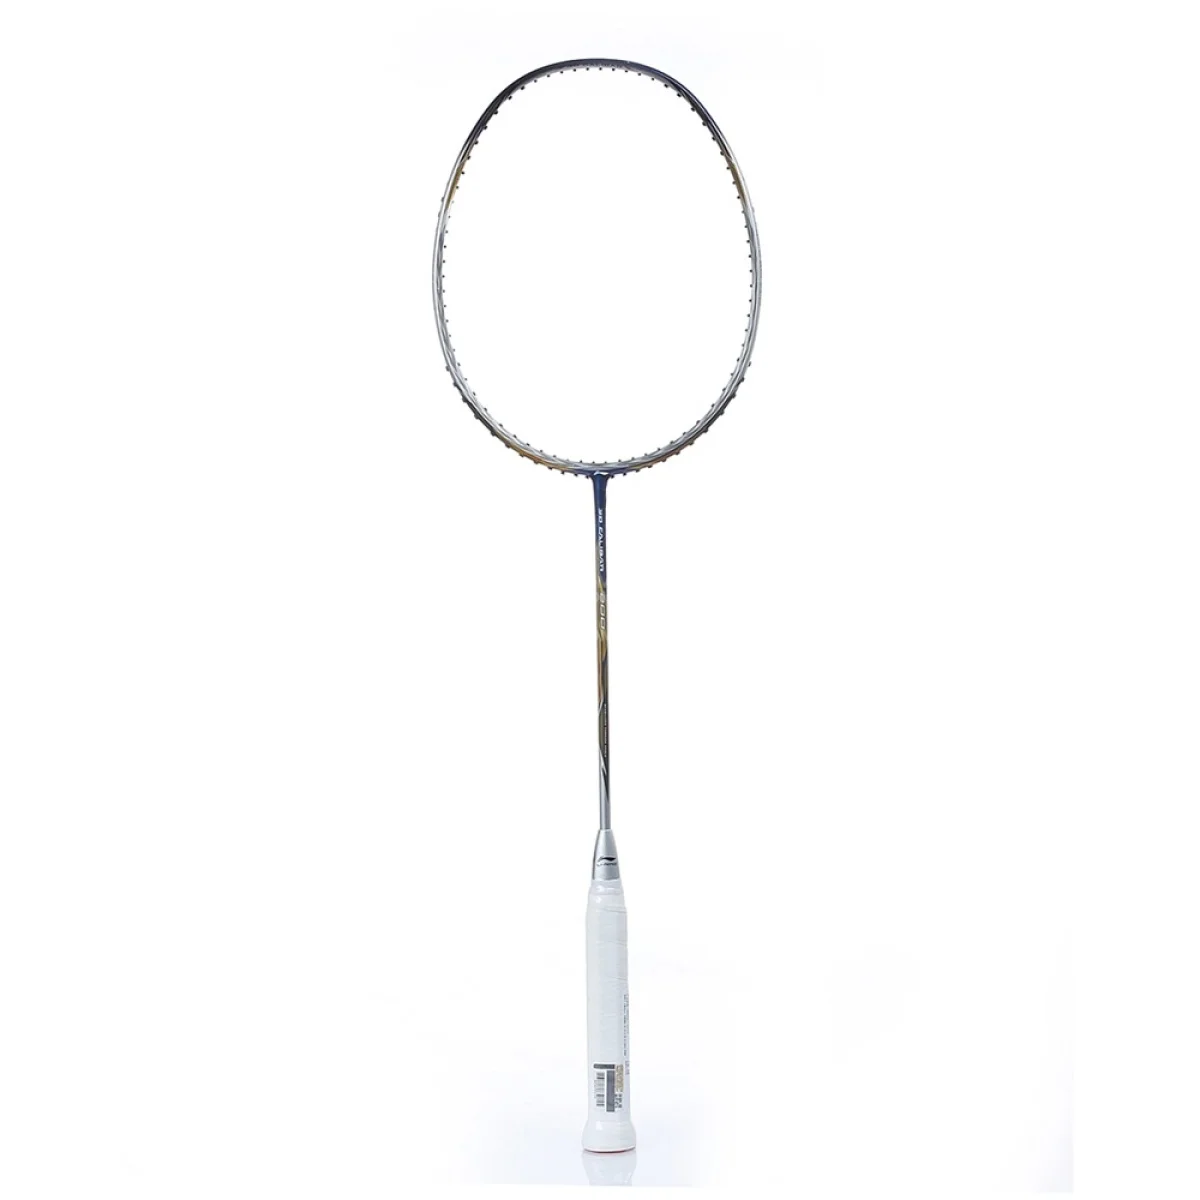 Buy Lining 3D Calibar 200 Badminton Racket